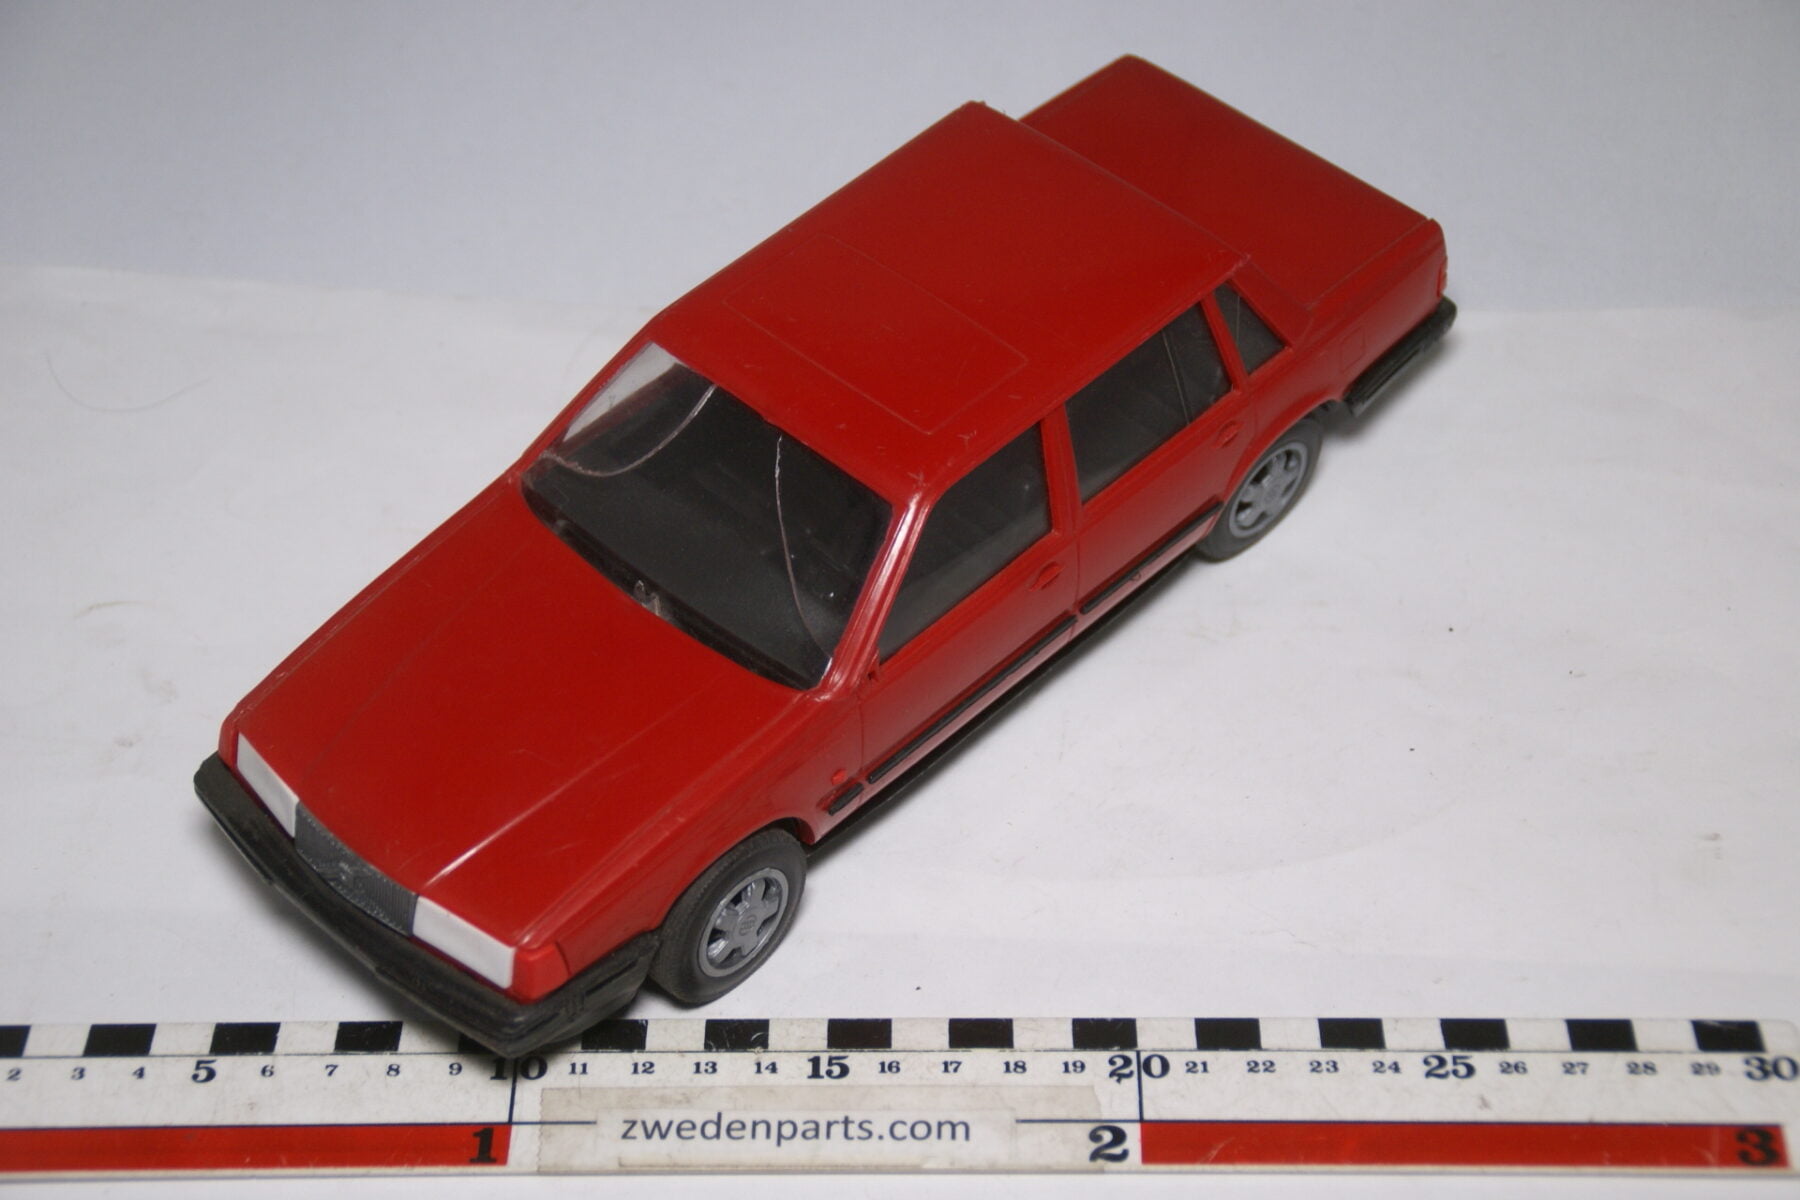 DSC09092 miniatuur Stahlberg Made in Finland Volvo 760GLE rood ca 1 op 18